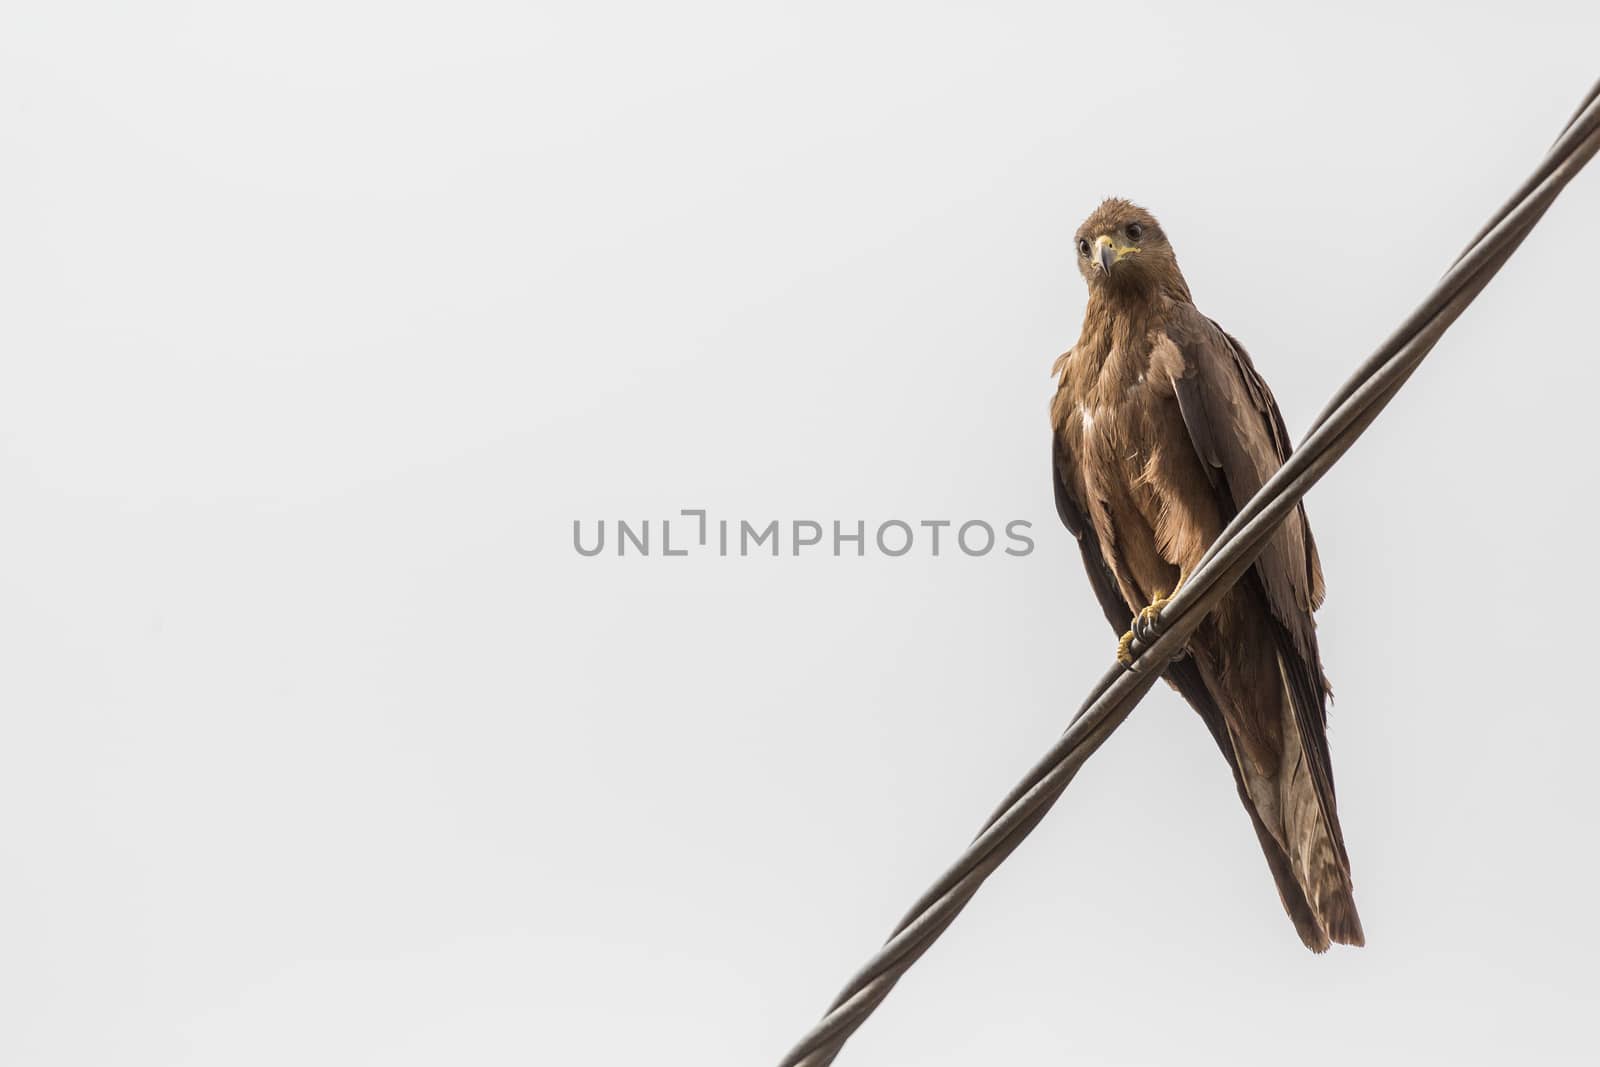 Black Kite, a medium sized bird of pray locally known as Amora in Ethiopia,